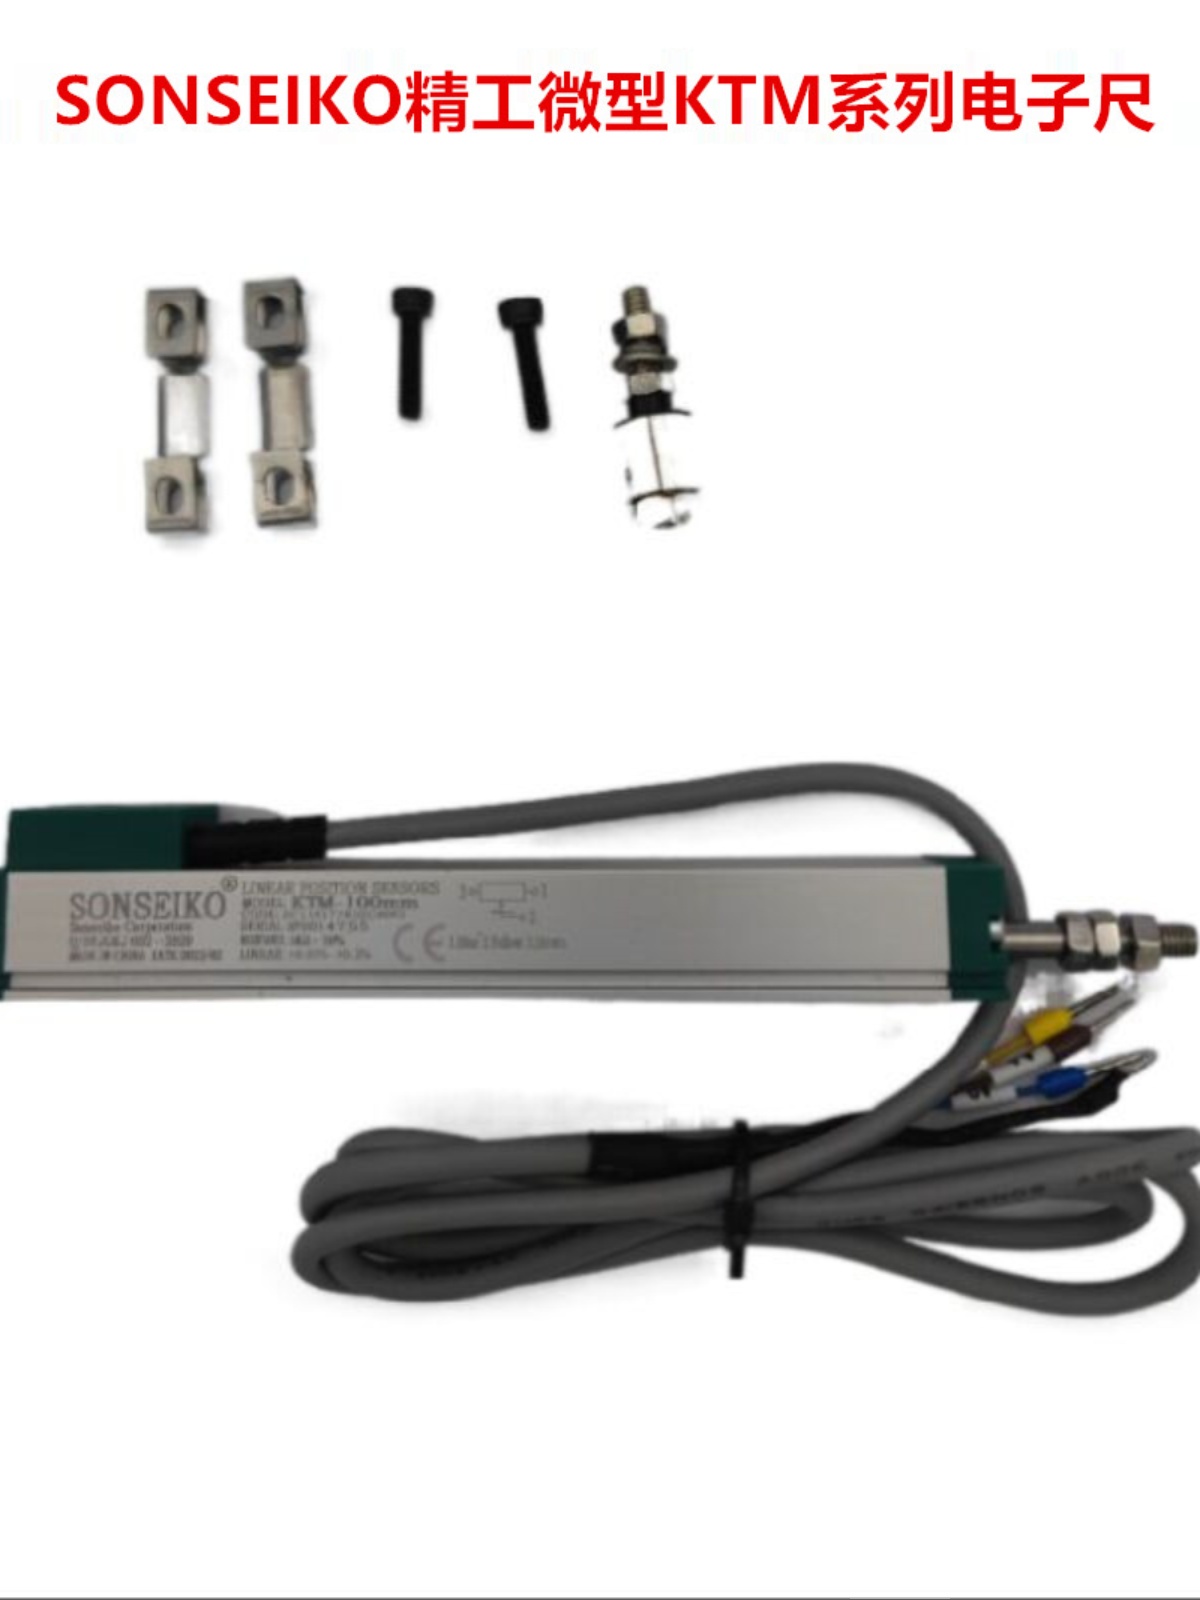 SONSEIKO精工注塑机顶针电子尺KTM-150mm微型电子尺 位移传感器 3C数码配件 其它配件 原图主图